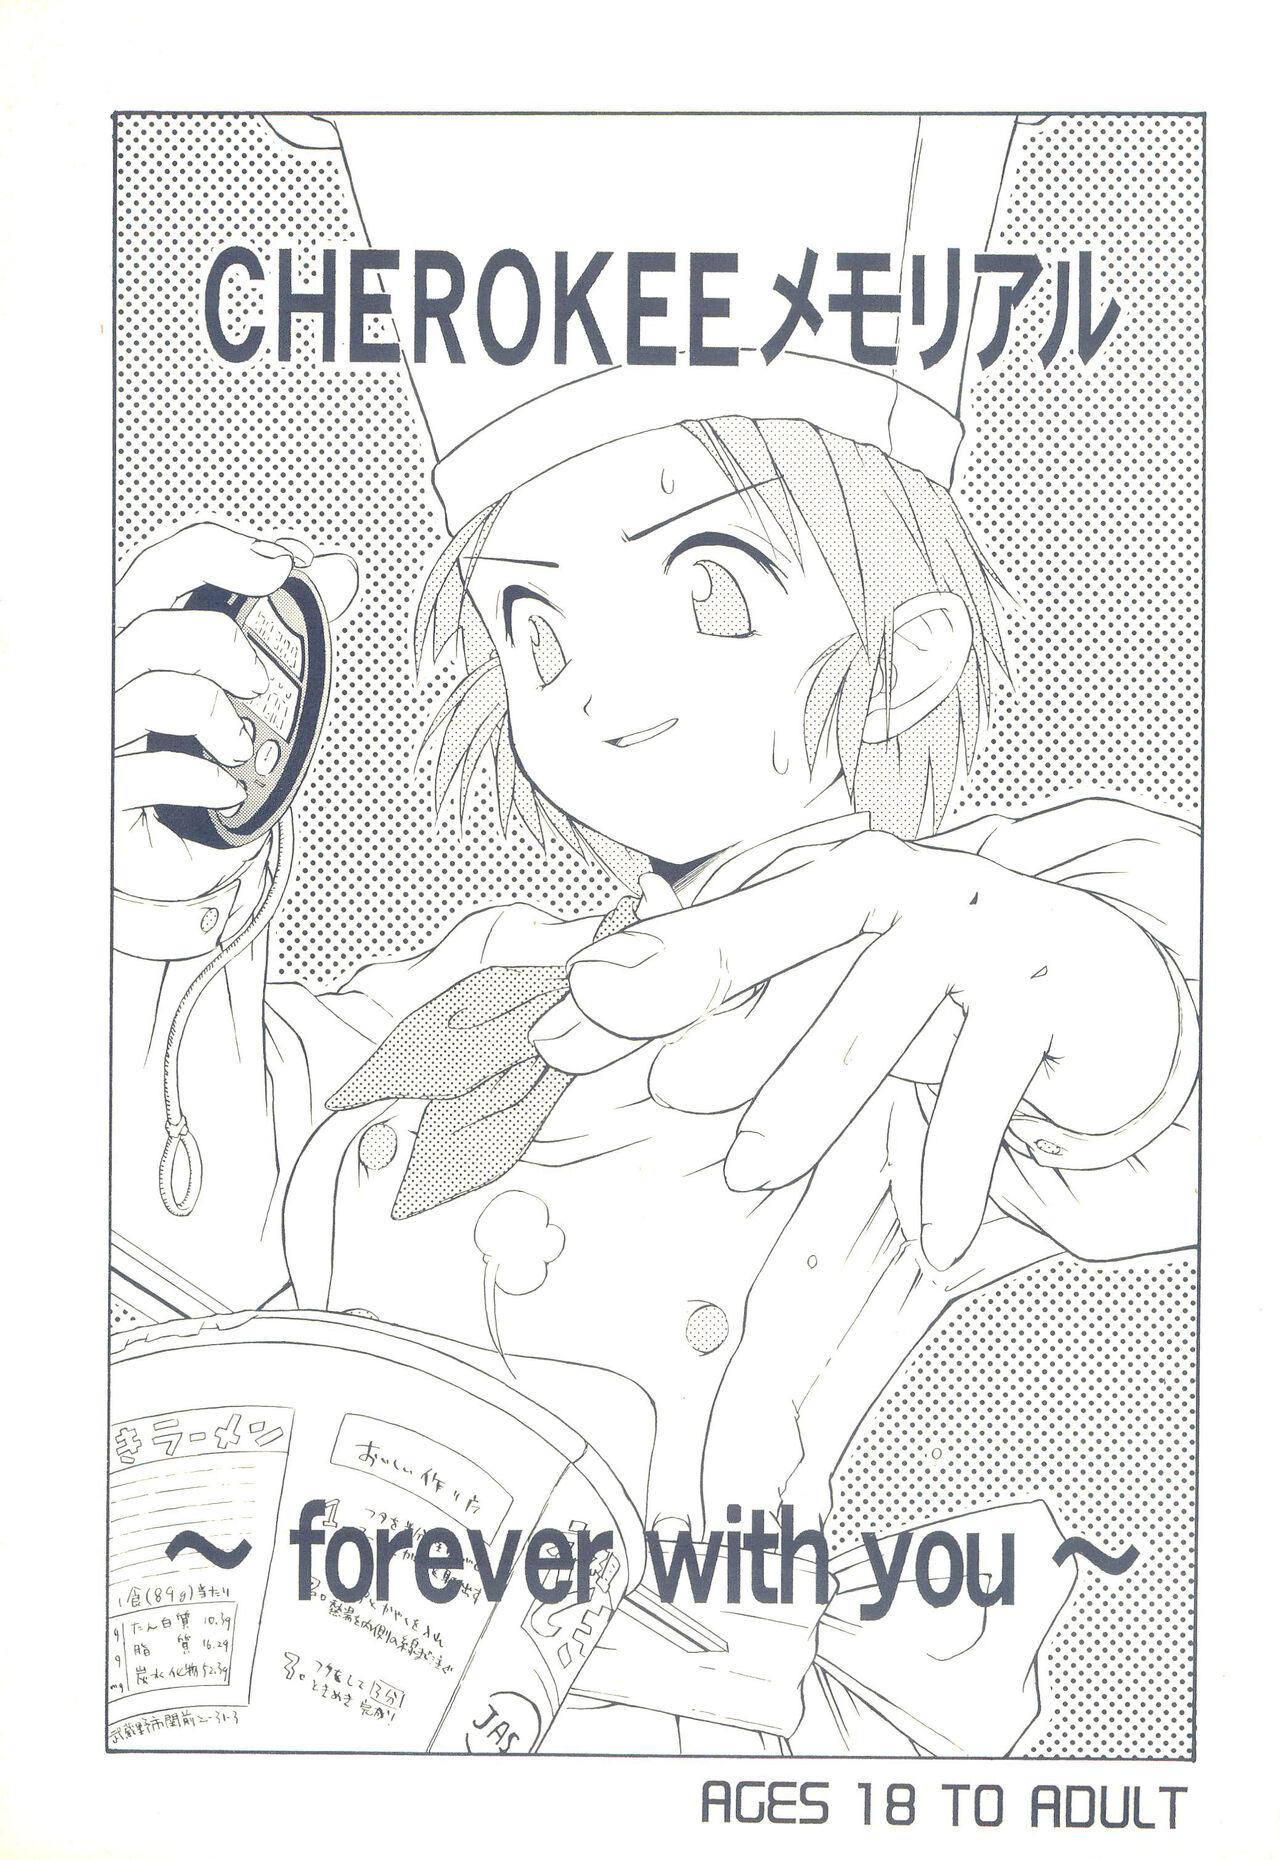 Toys CHEROKEE Memorial forever with you - Tokimeki memorial Porno - Page 1